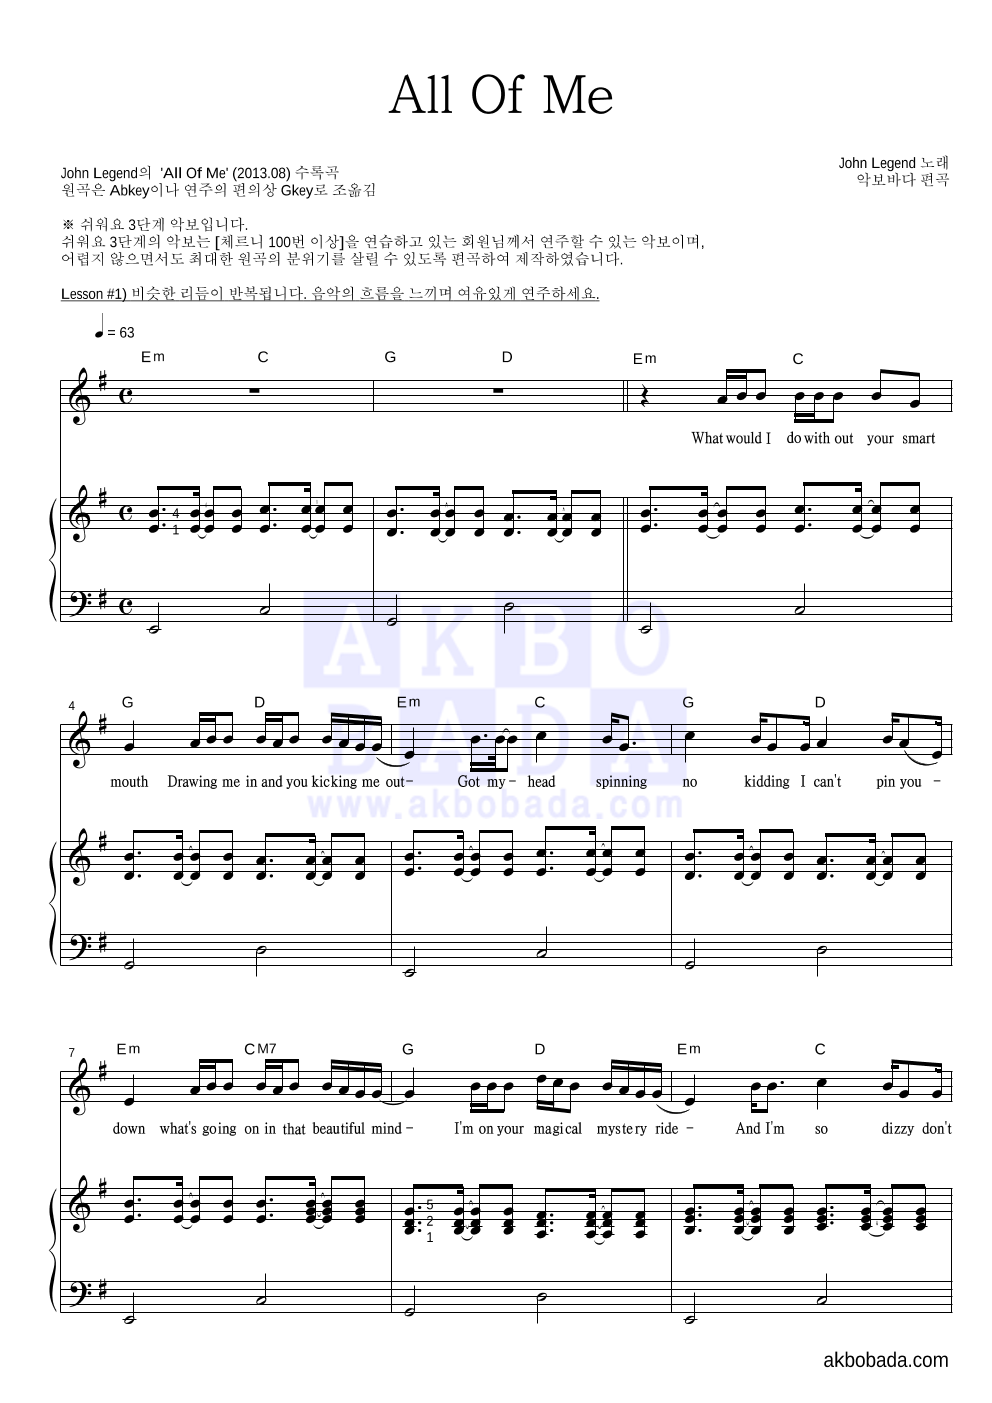 John Legend - All Of Me 피아노3단-쉬워요 악보 